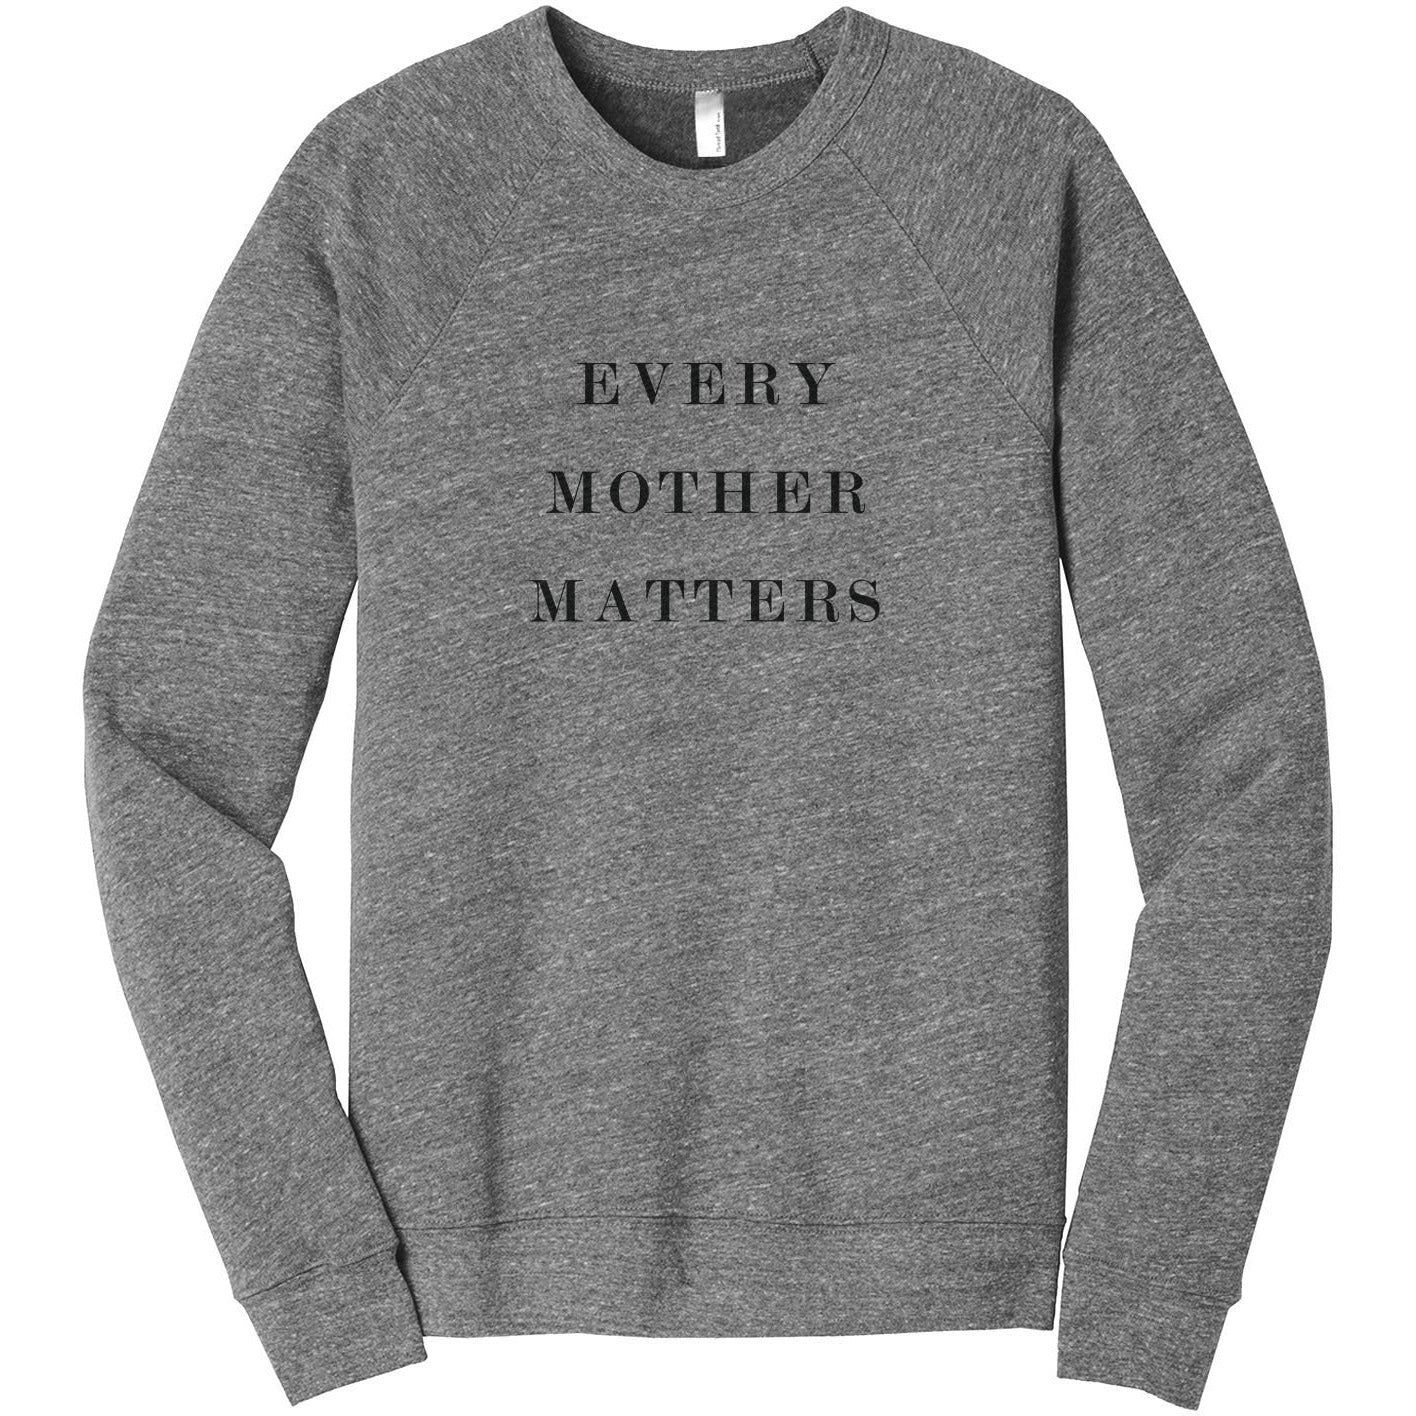 Every Mother Matters Women's Cozy Fleece Longsleeves Sweater Heather Grey FRONT